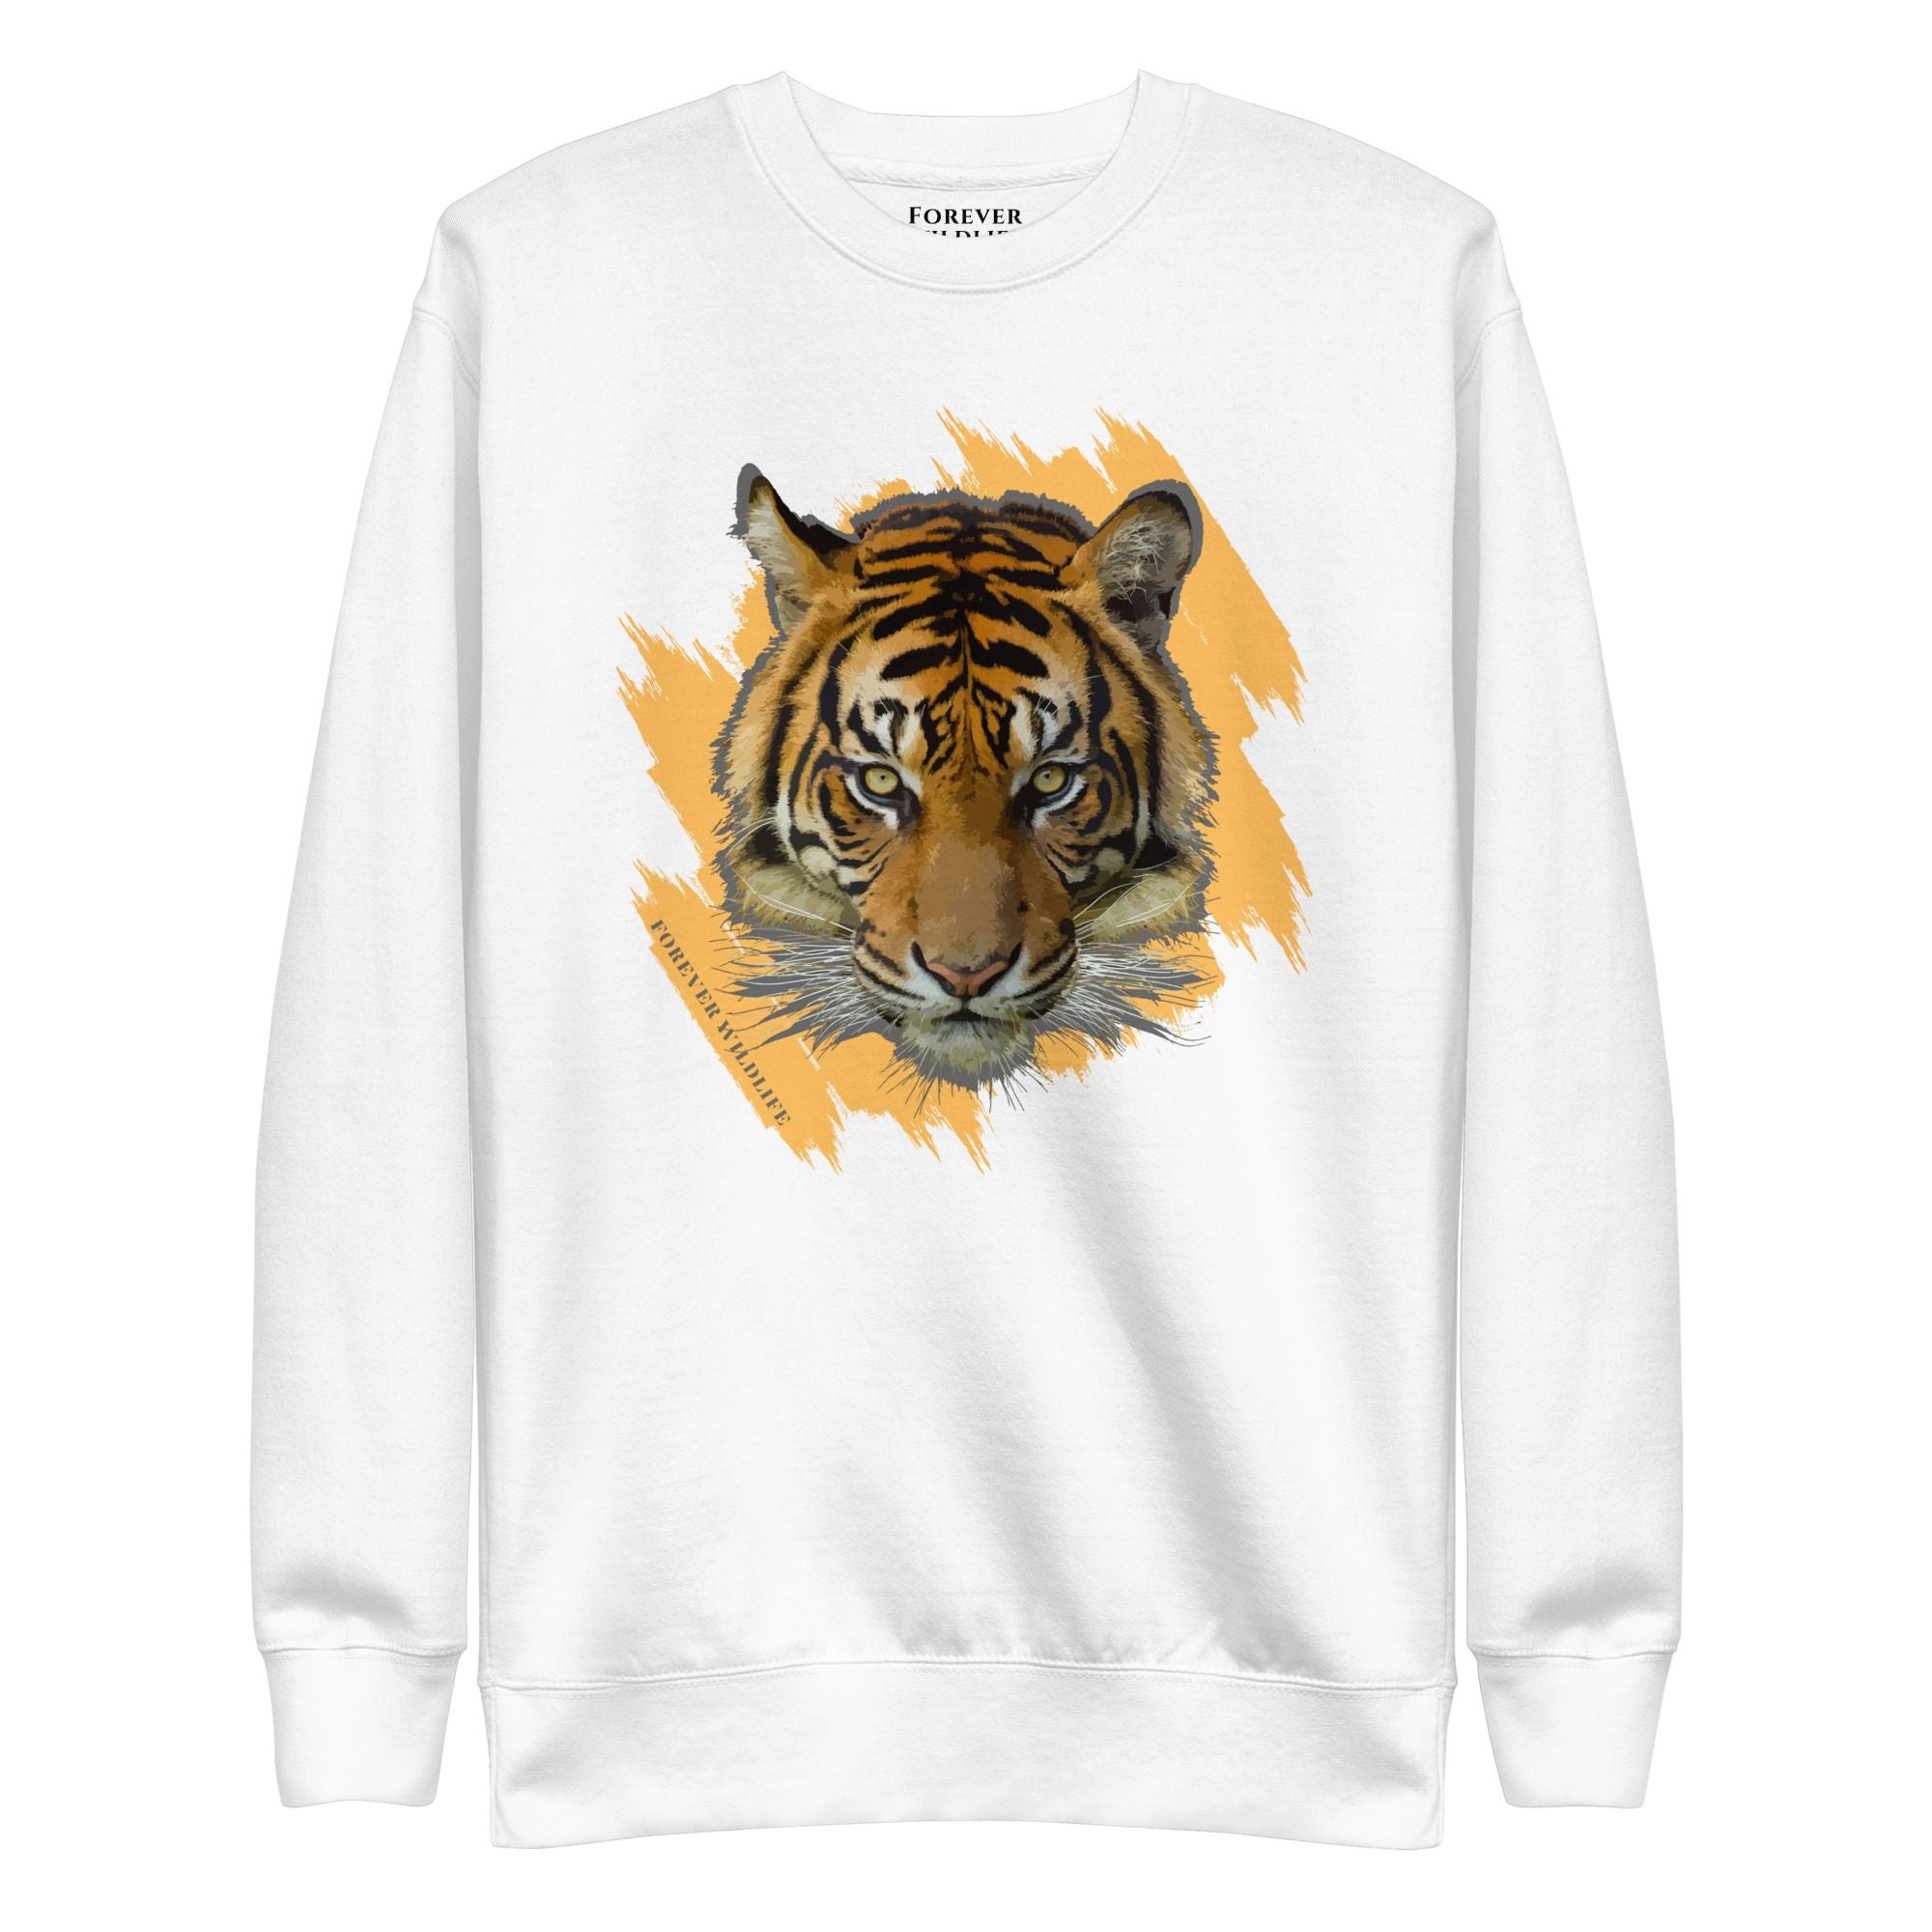 Tiger Sweatshirt in White-Premium Wildlife Animal Inspiration Sweatshirt Design, part of Wildlife Sweatshirts & Clothing from Forever Wildlife.